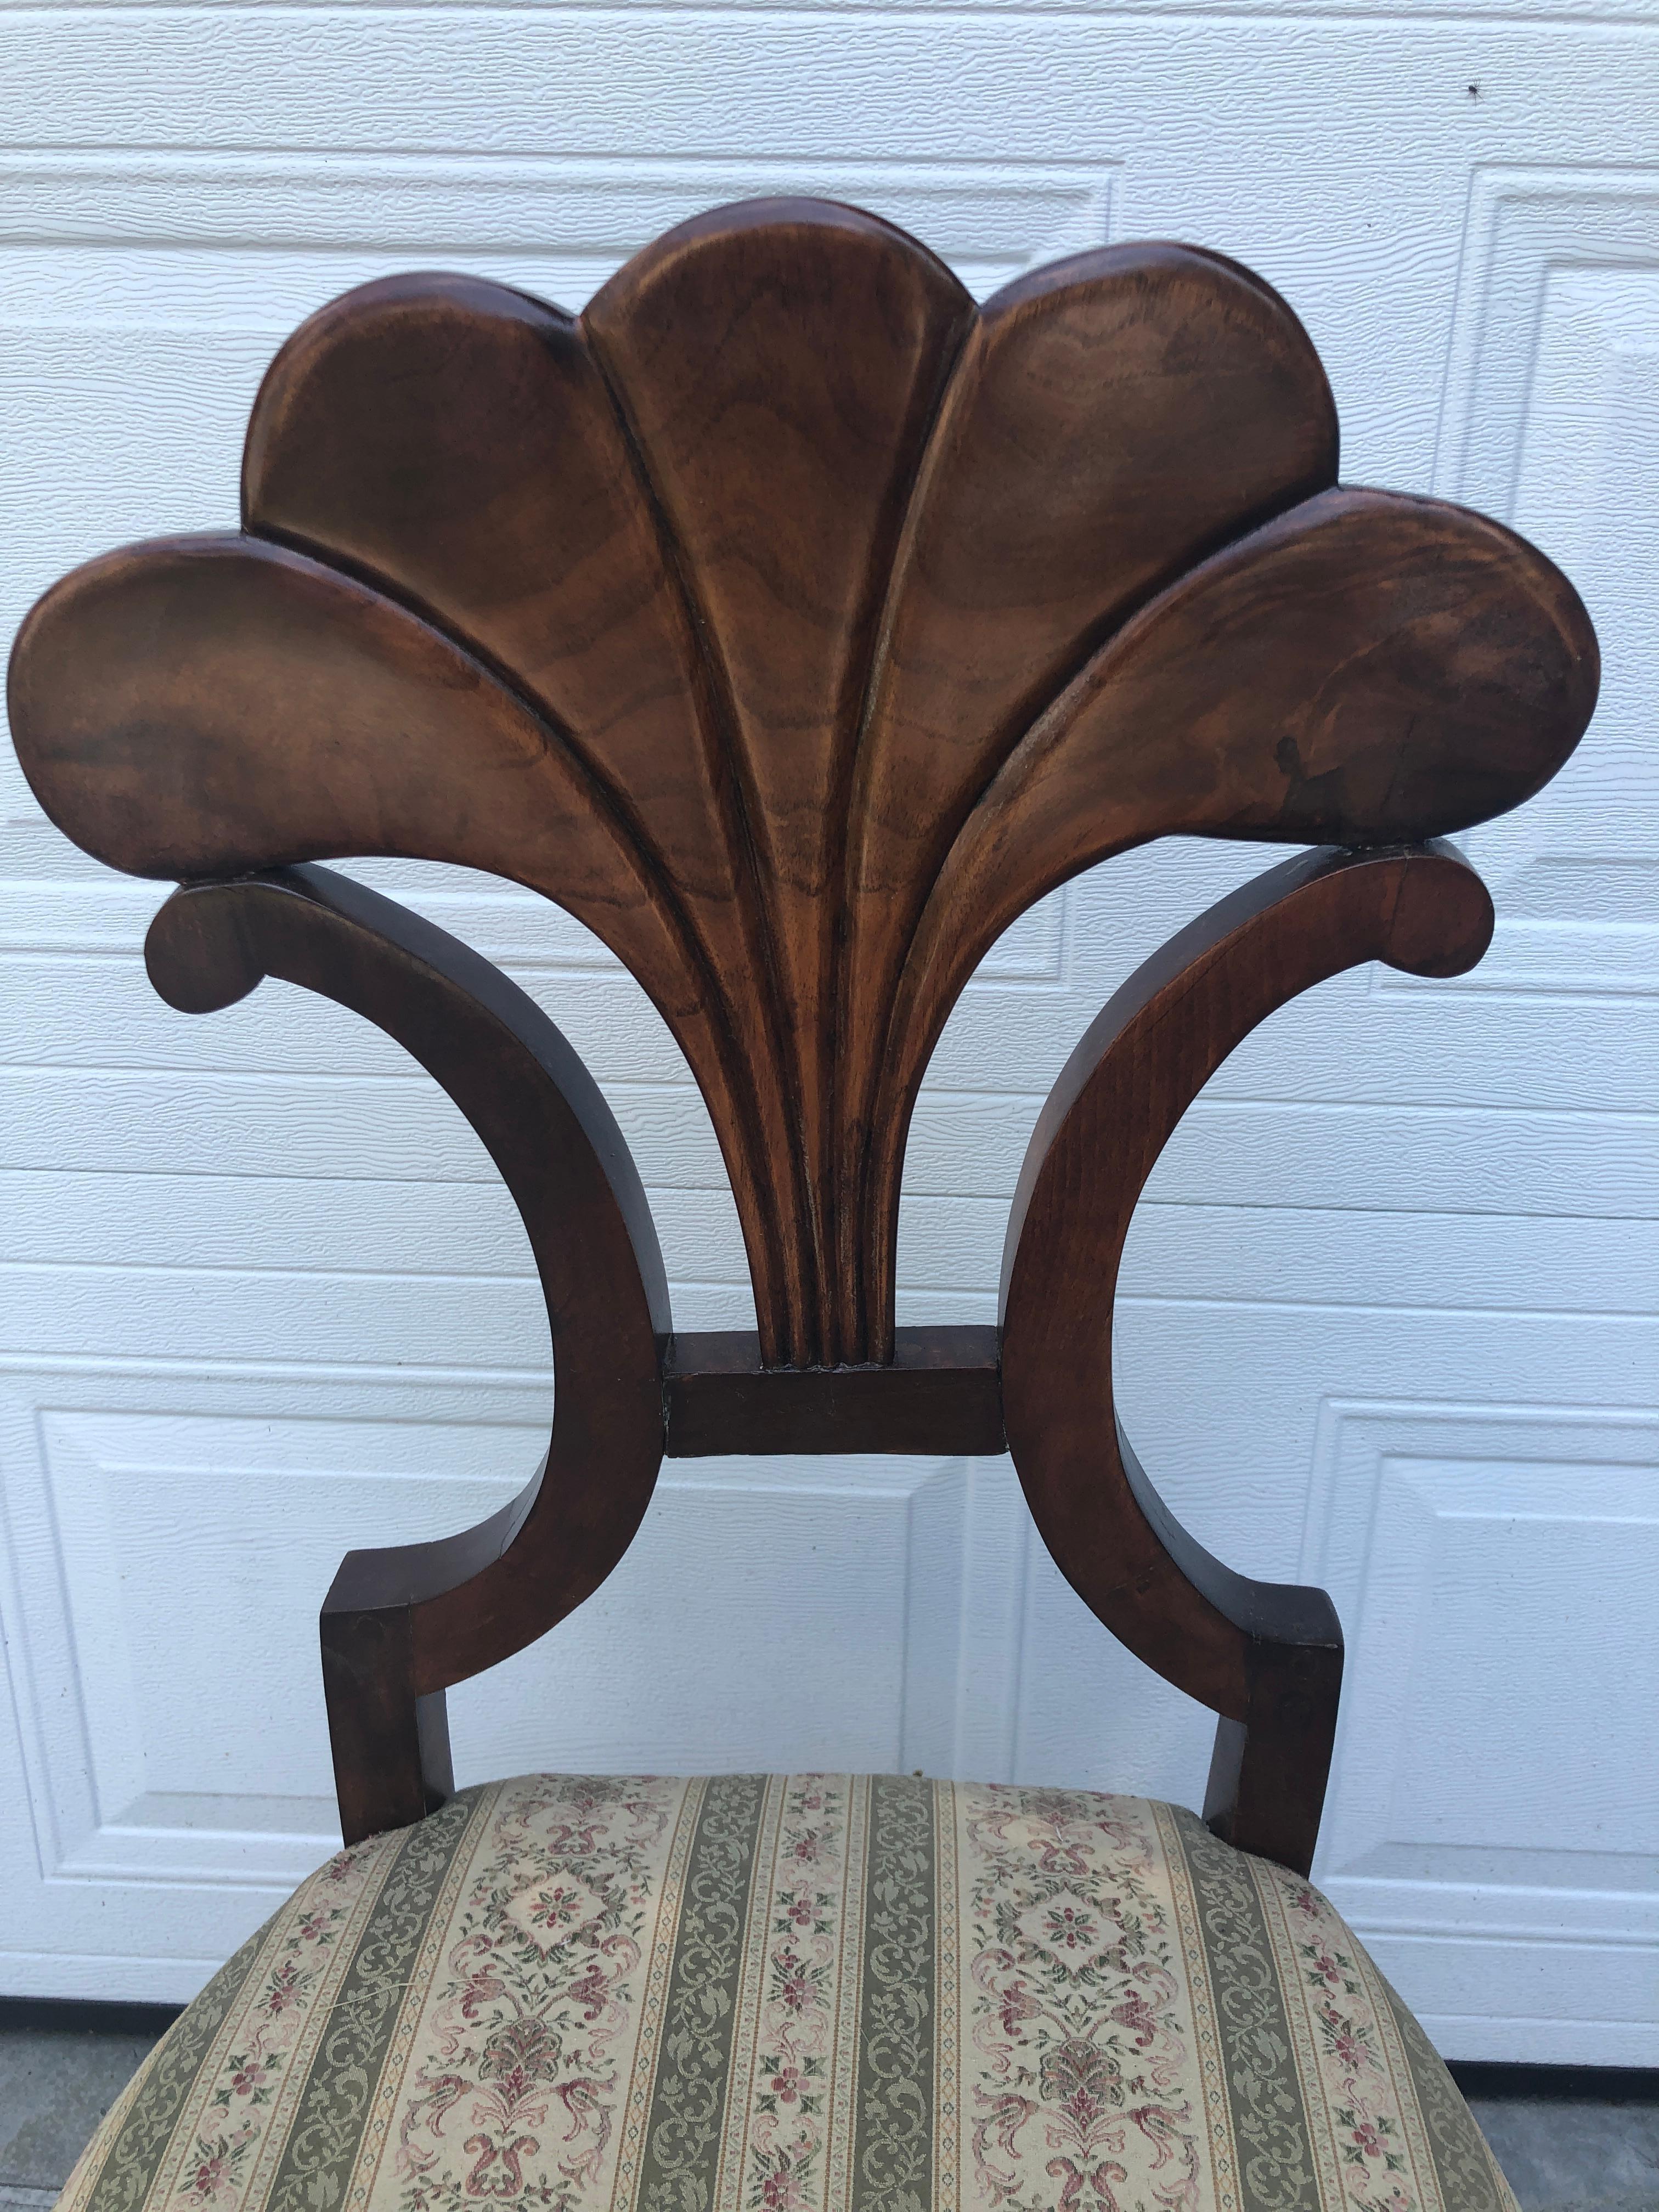 Set of four Biedermeier chairs, Austria 19th-20th century, walnut veneer. In good unrestored condition.